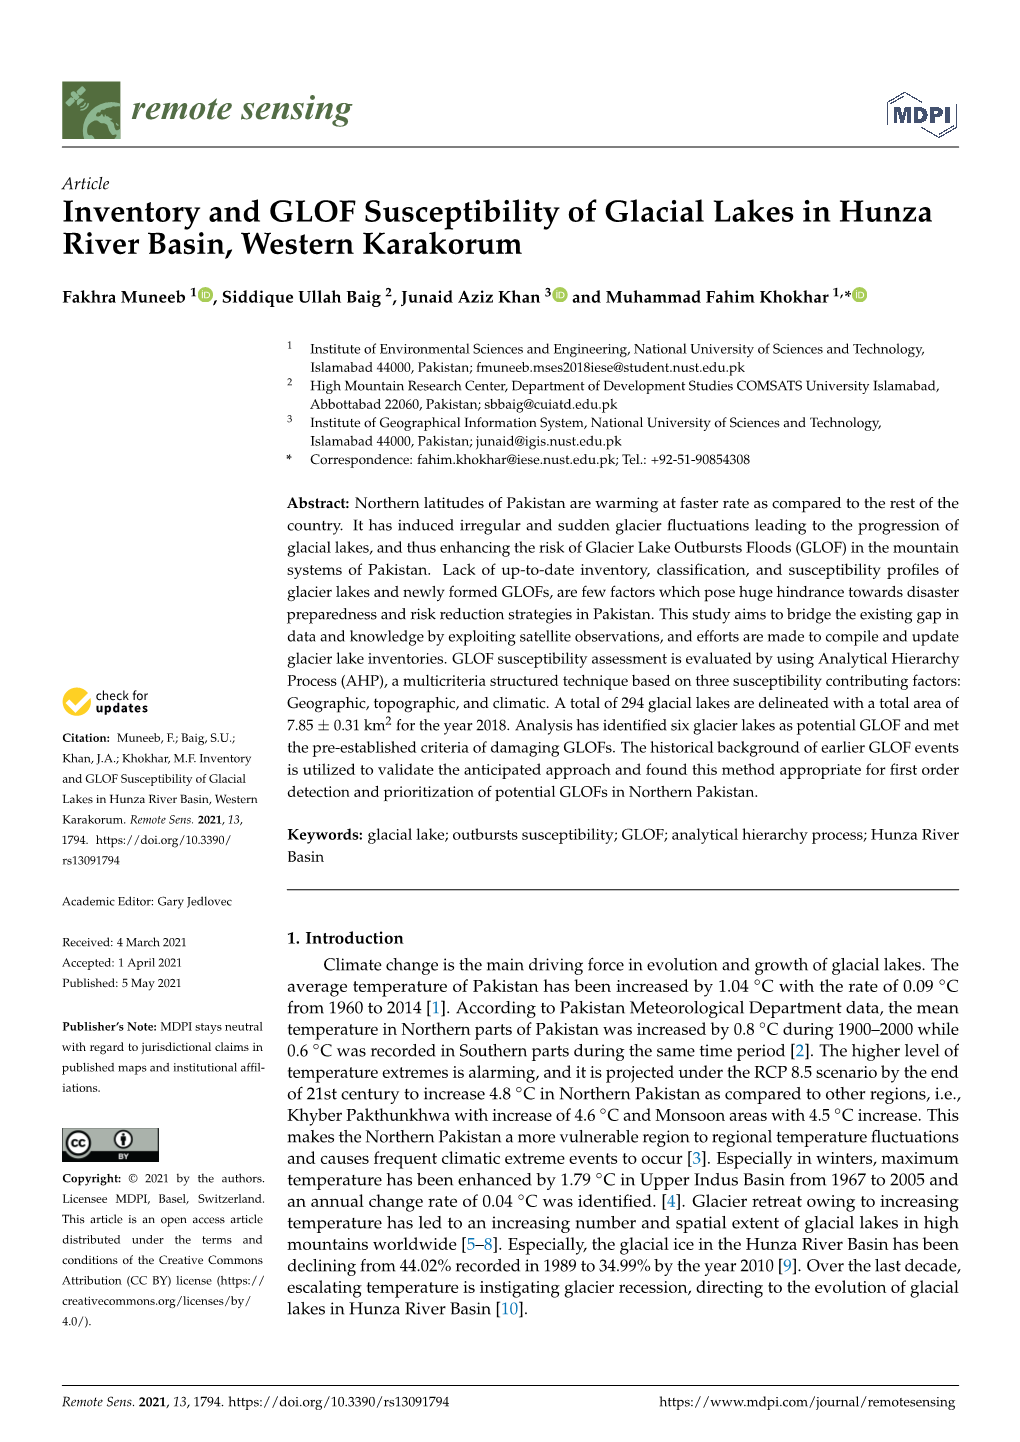 Inventory and GLOF Susceptibility of Glacial Lakes in Hunza River Basin, Western Karakorum